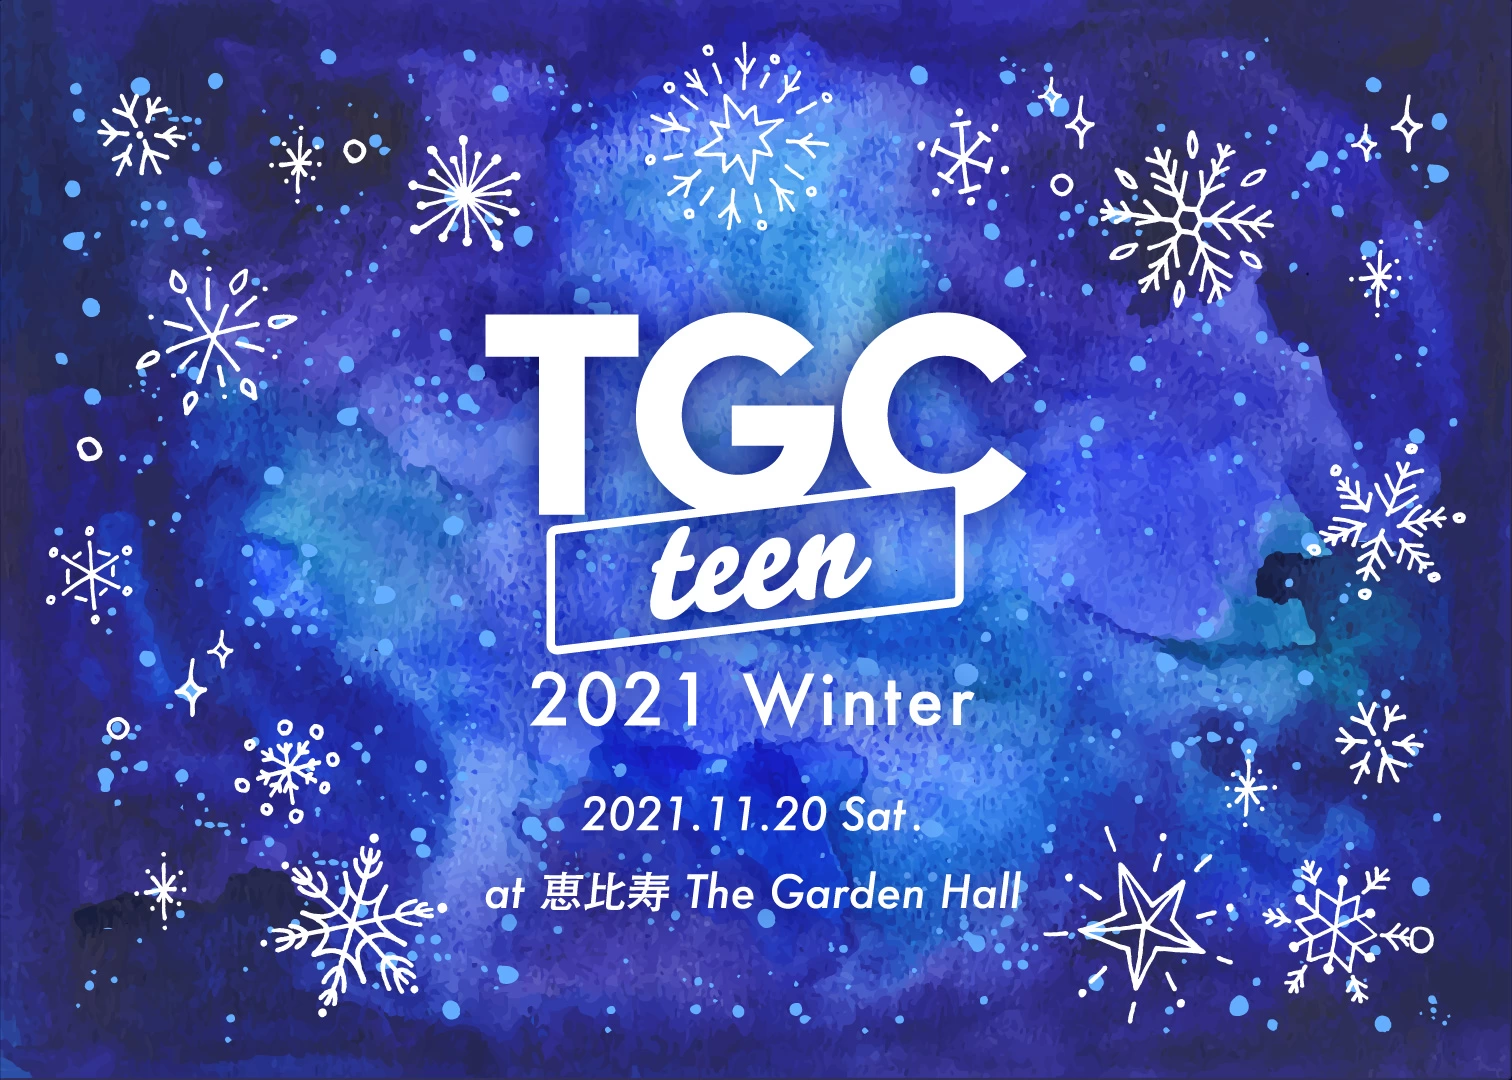 TGC teen 2021 Winter